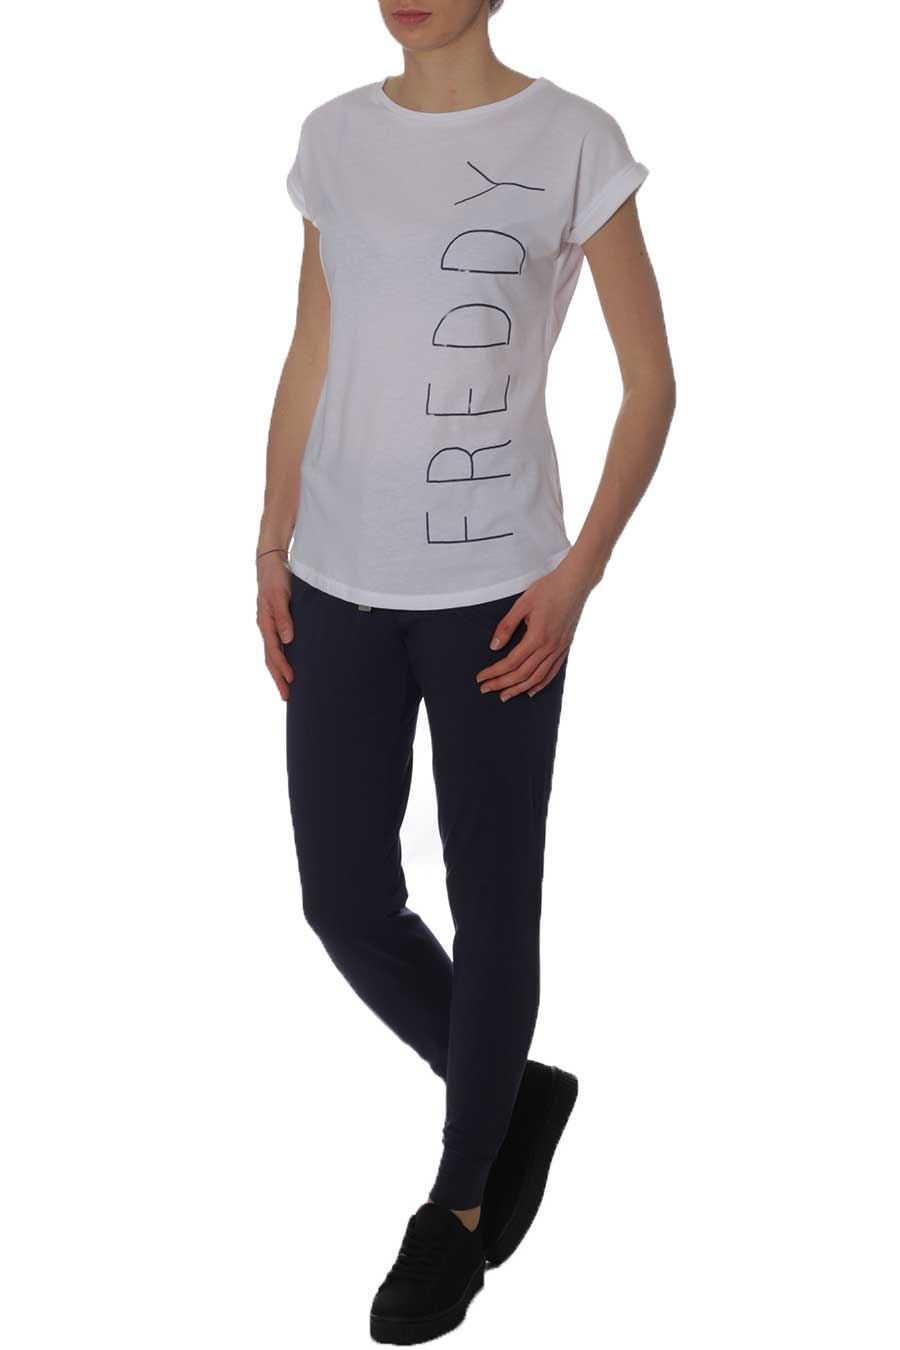 Pantalone + T-shirt Donna Freddy SAVEDTS B63W Blu Bianco, XL MainApps